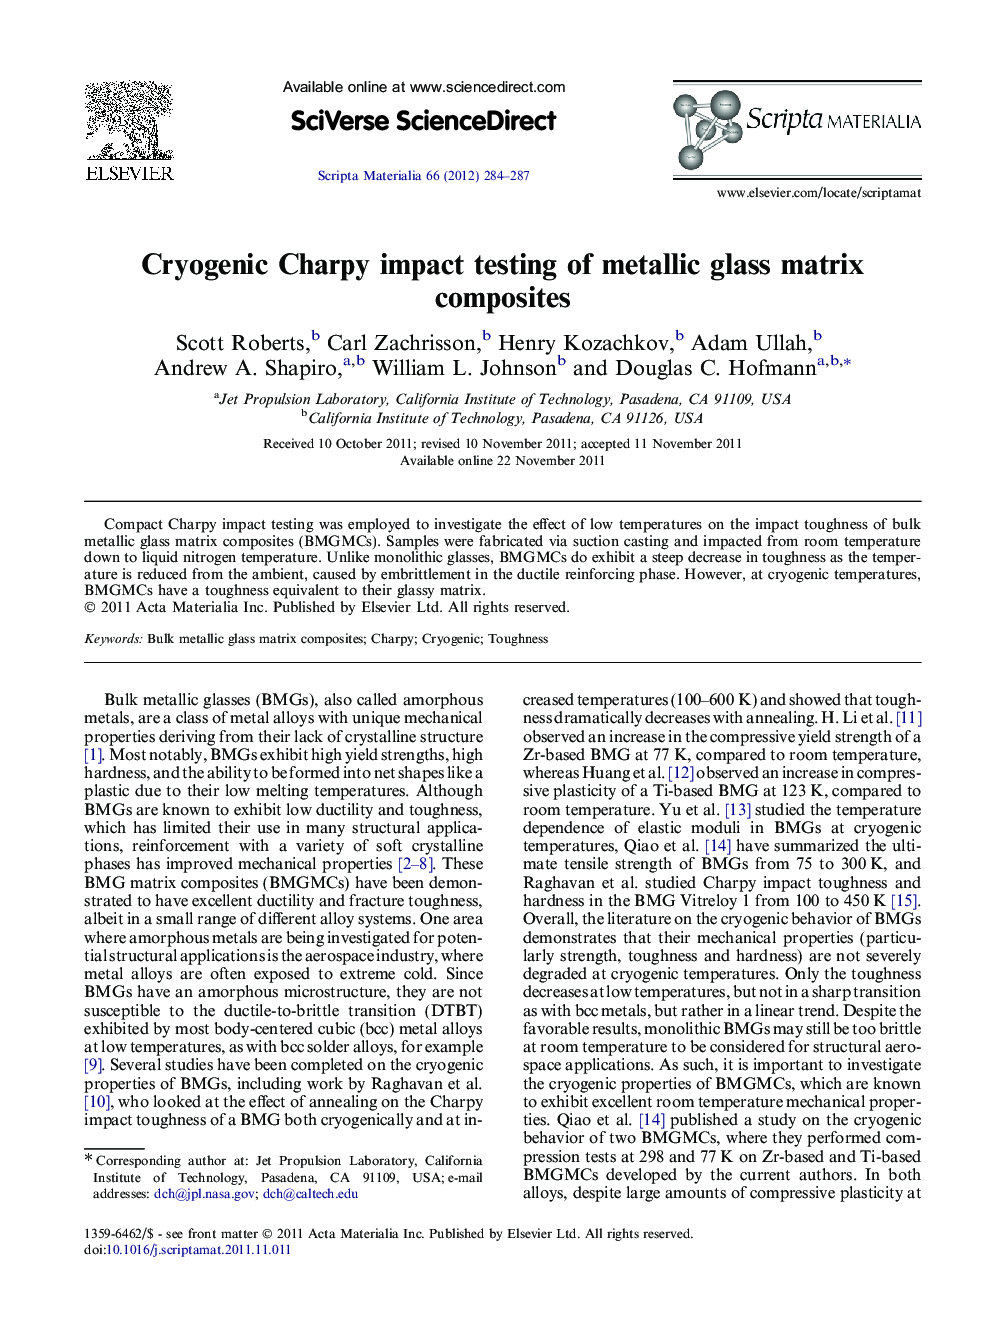 Cryogenic Charpy impact testing of metallic glass matrix composites